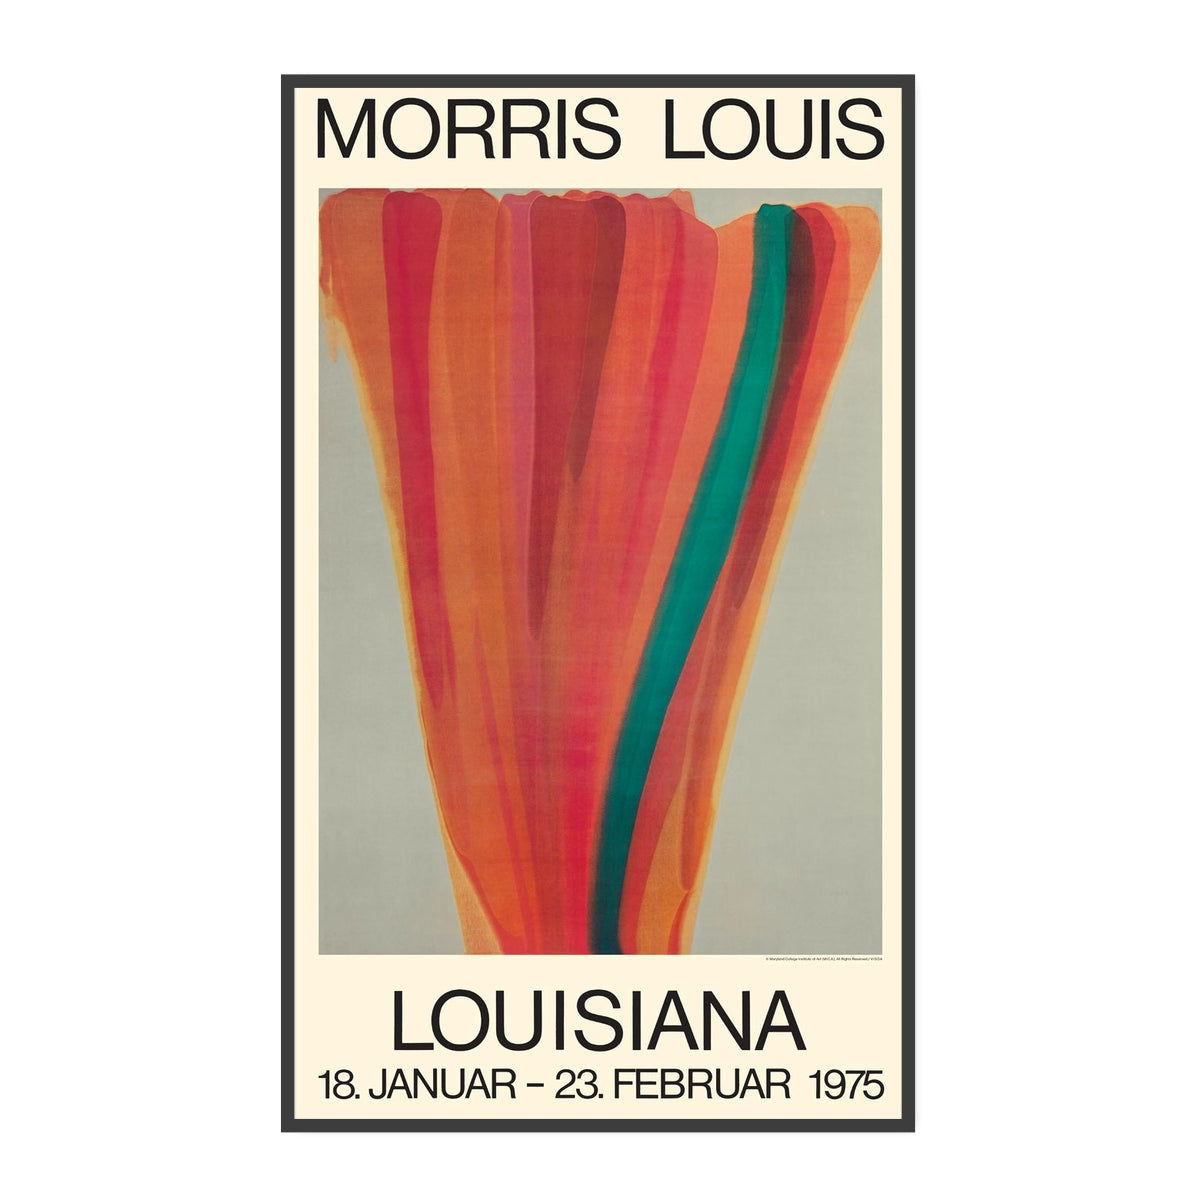 MORRIS LOUIS / LOUISIANA 1975